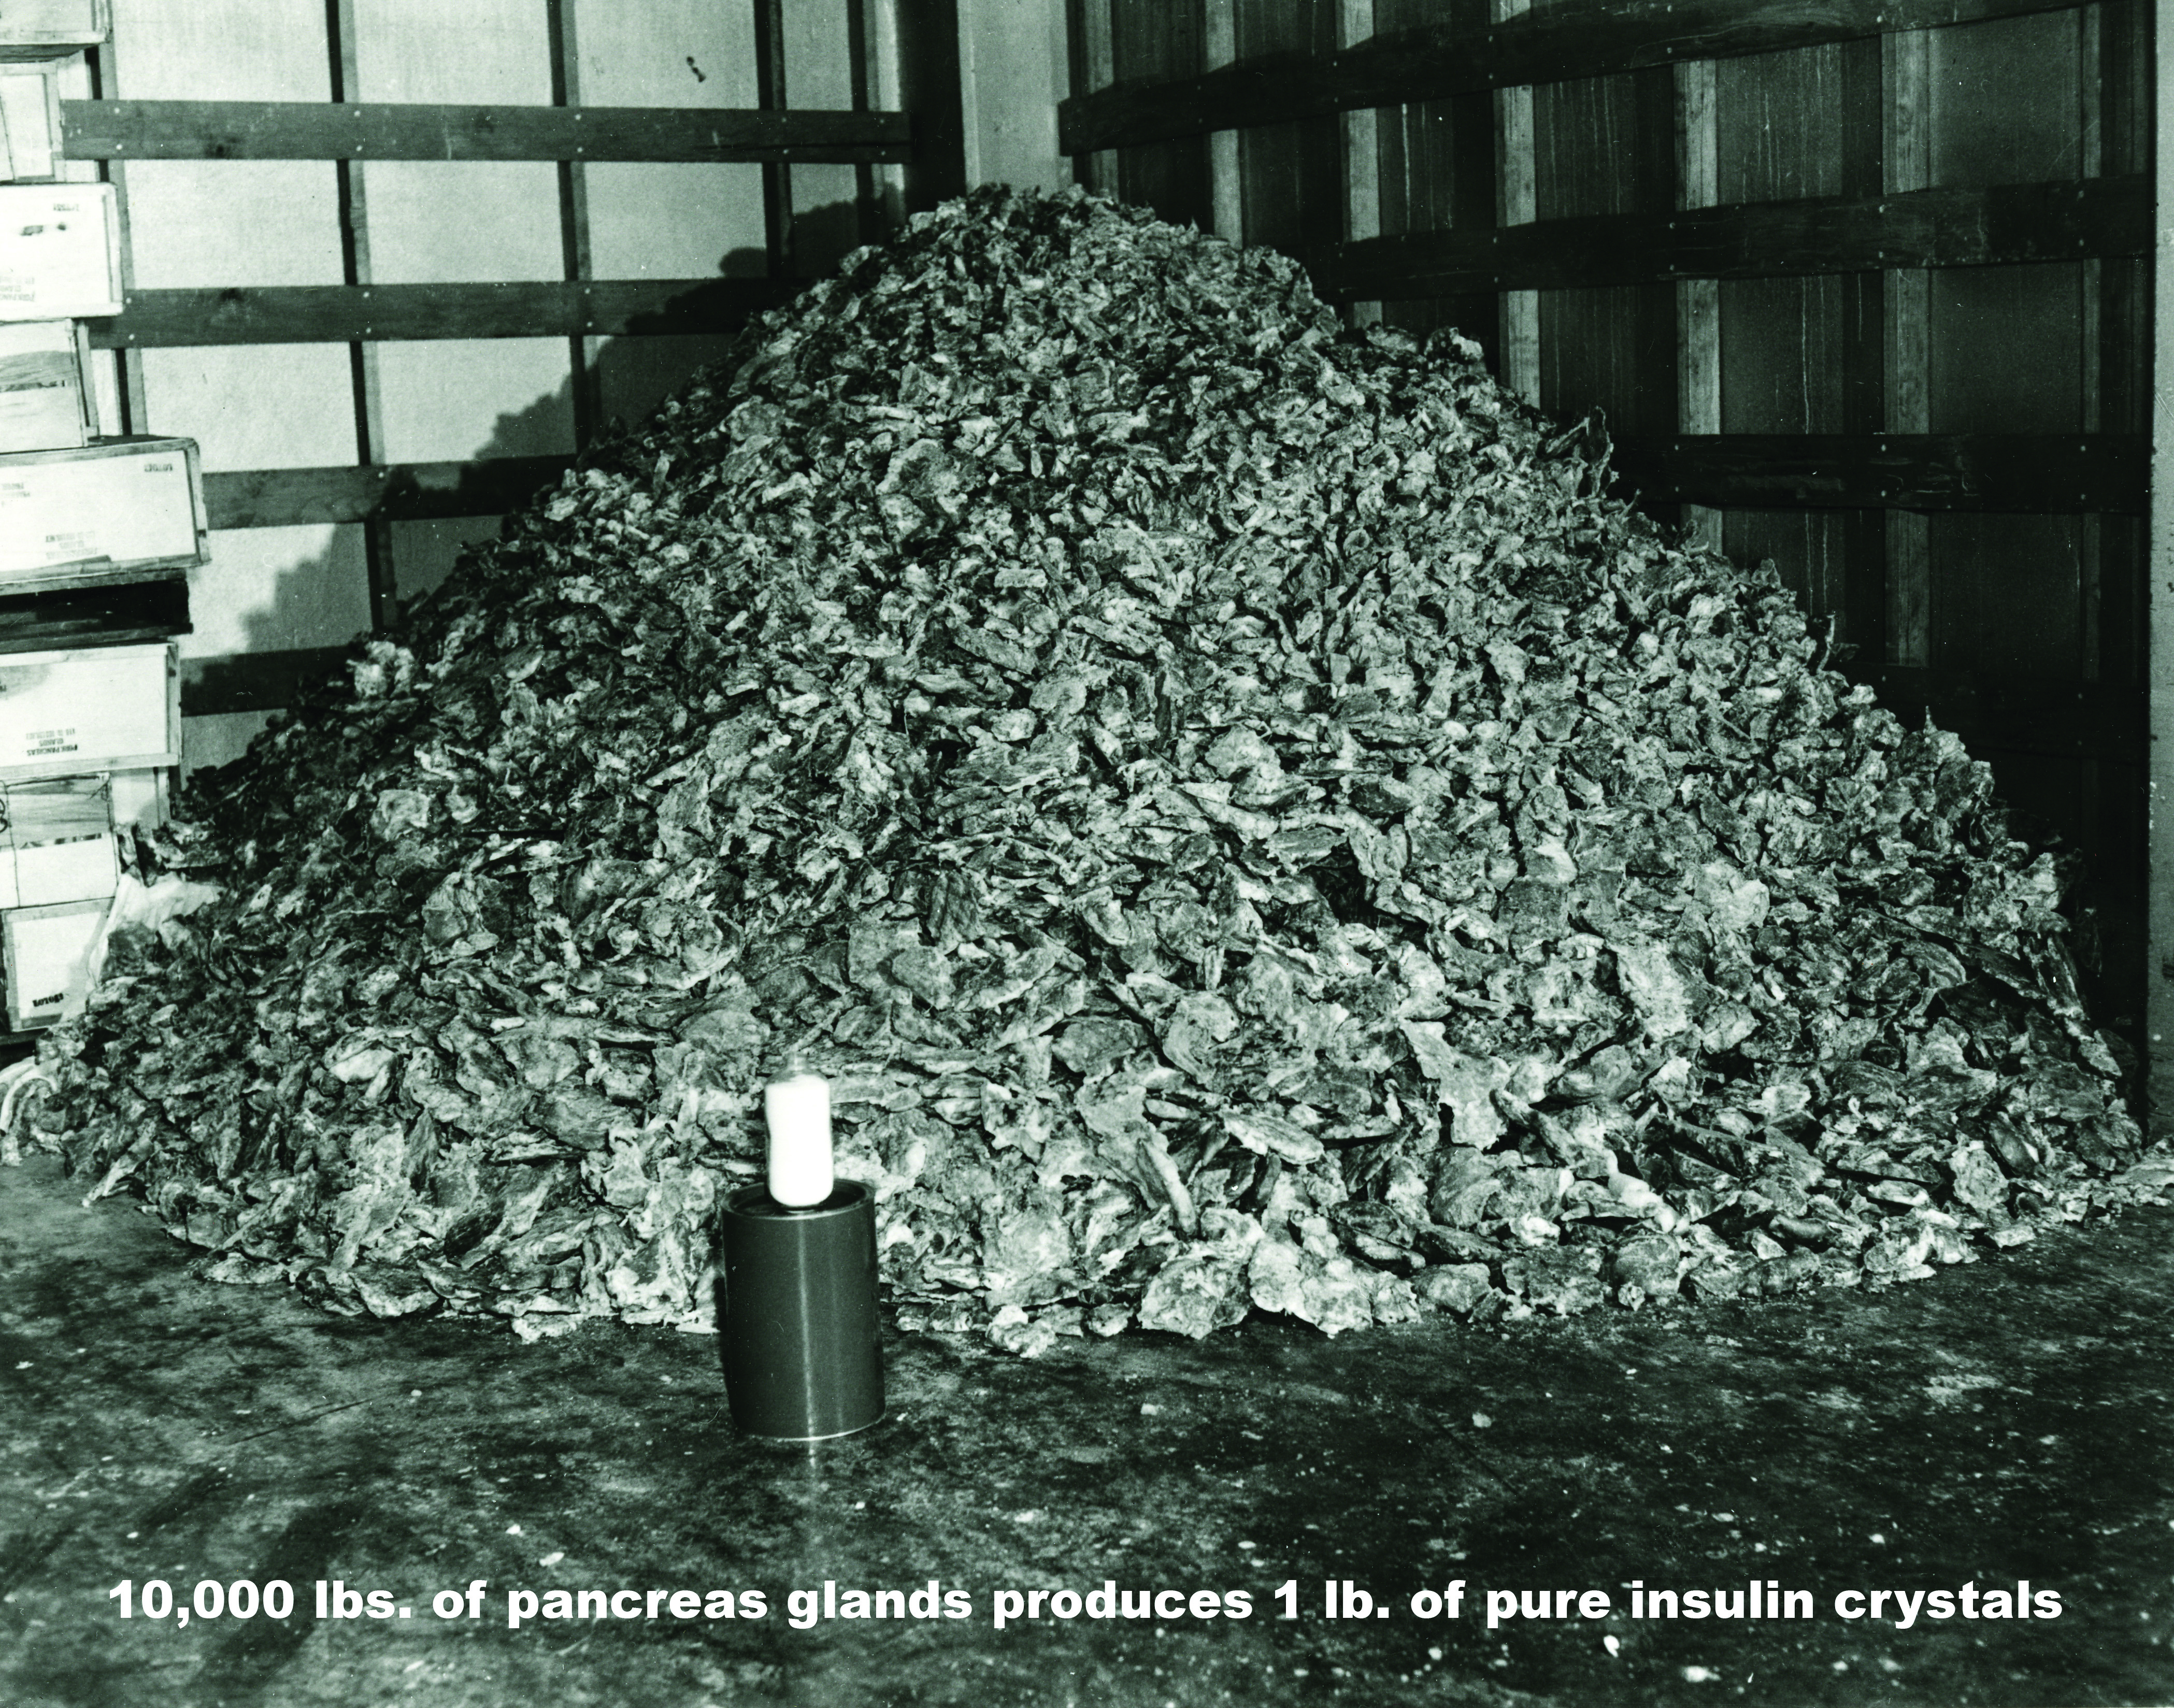 Pancreas glands 1951 with caption.jpg